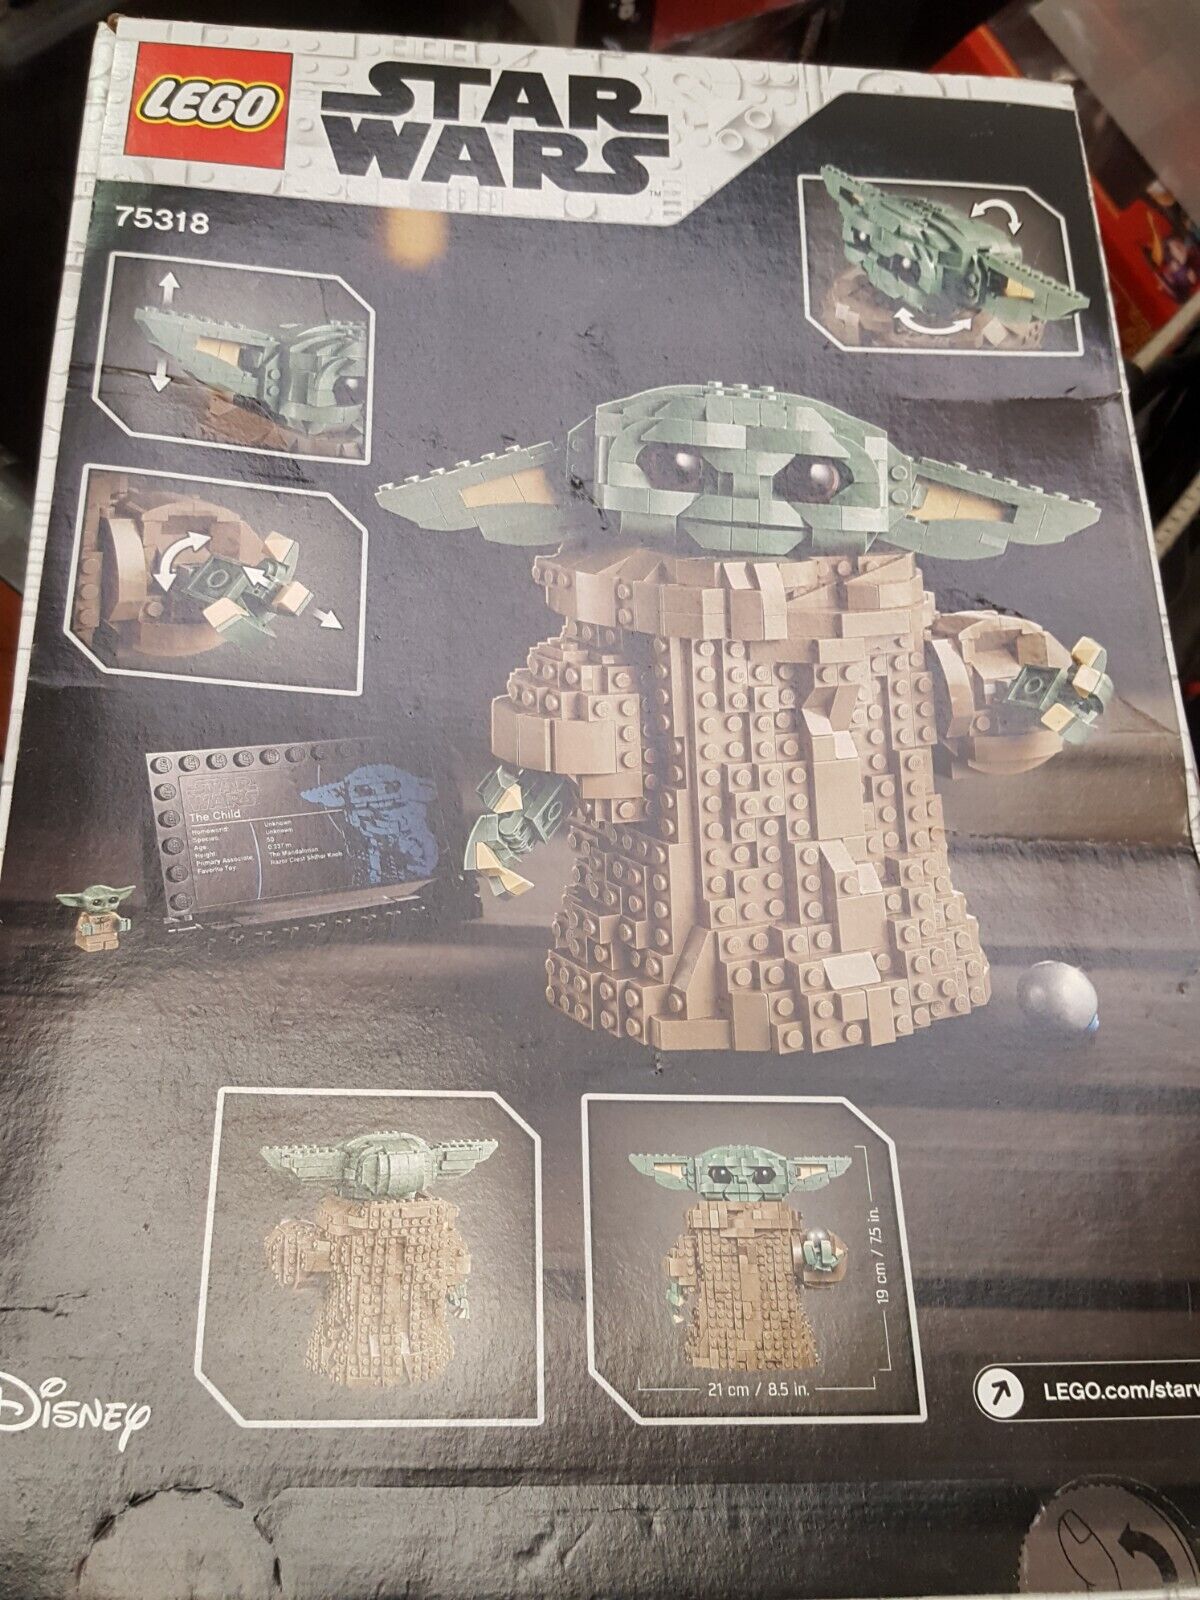 Lego Star Wars Baby Yoda / The Child Mandalorian 1073 Pcs (75318)